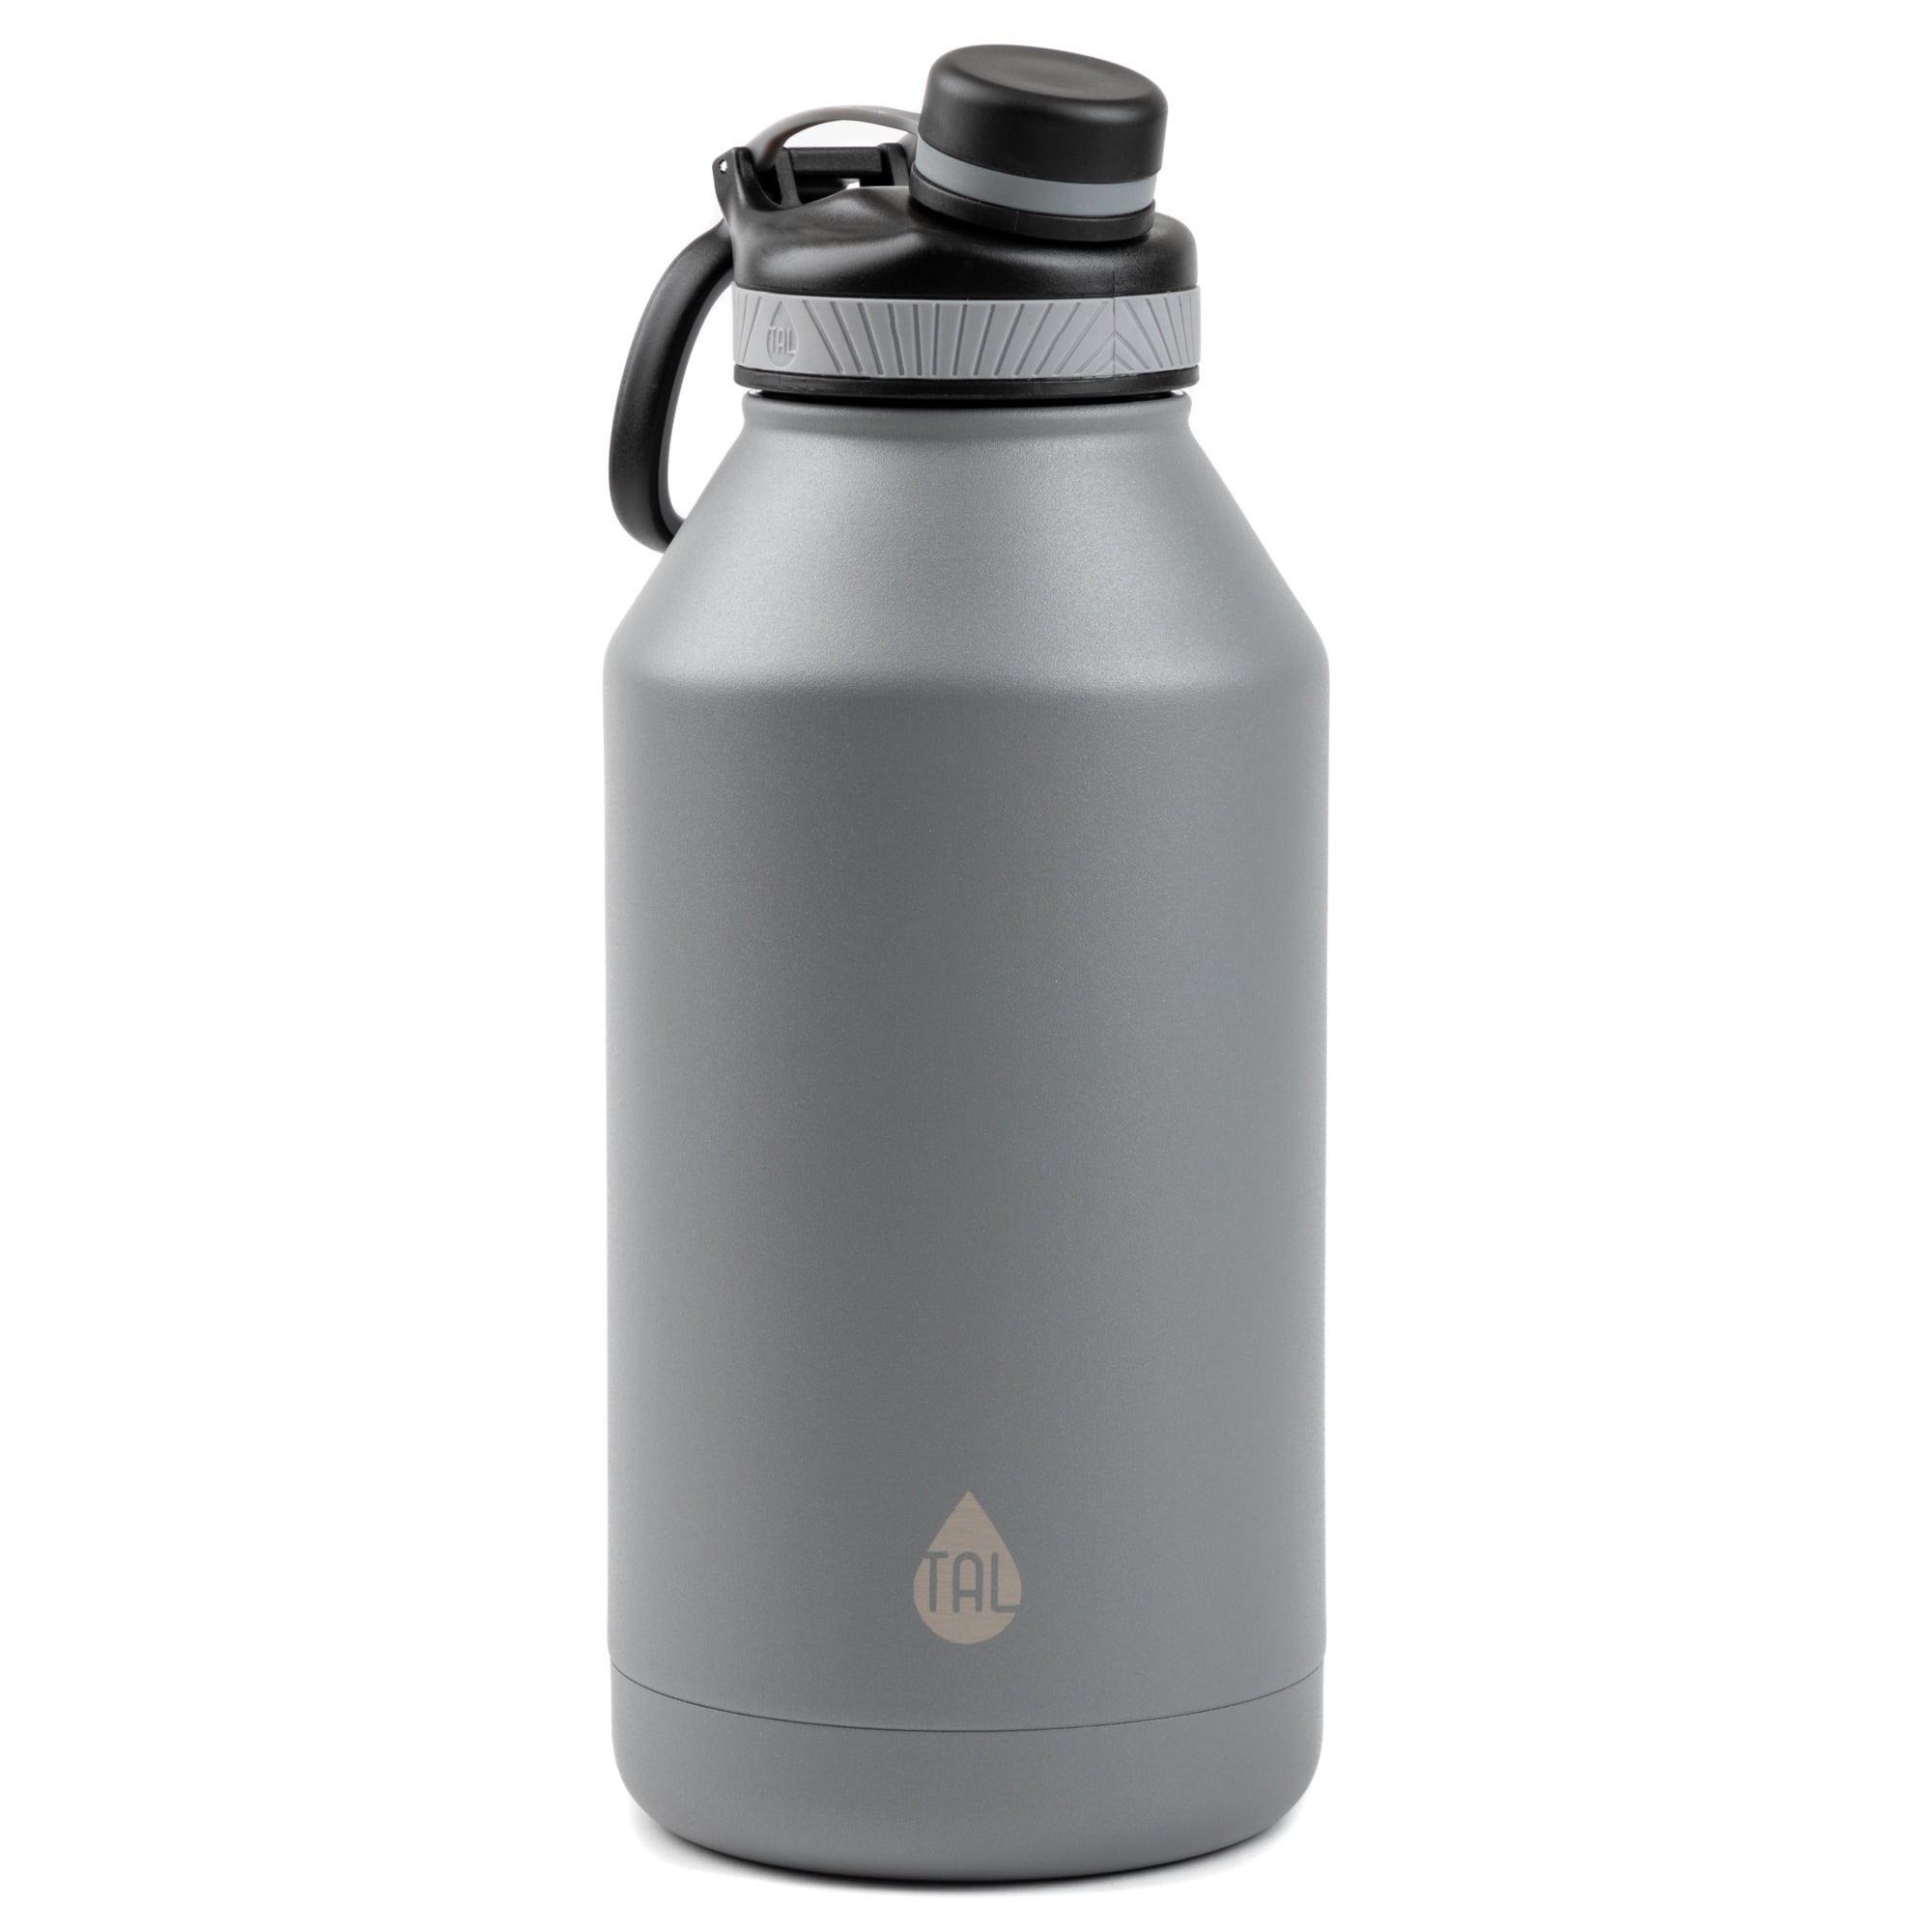 Tal Ranger Pro 64 oz Water Bottle - Black (WM1371) for sale online